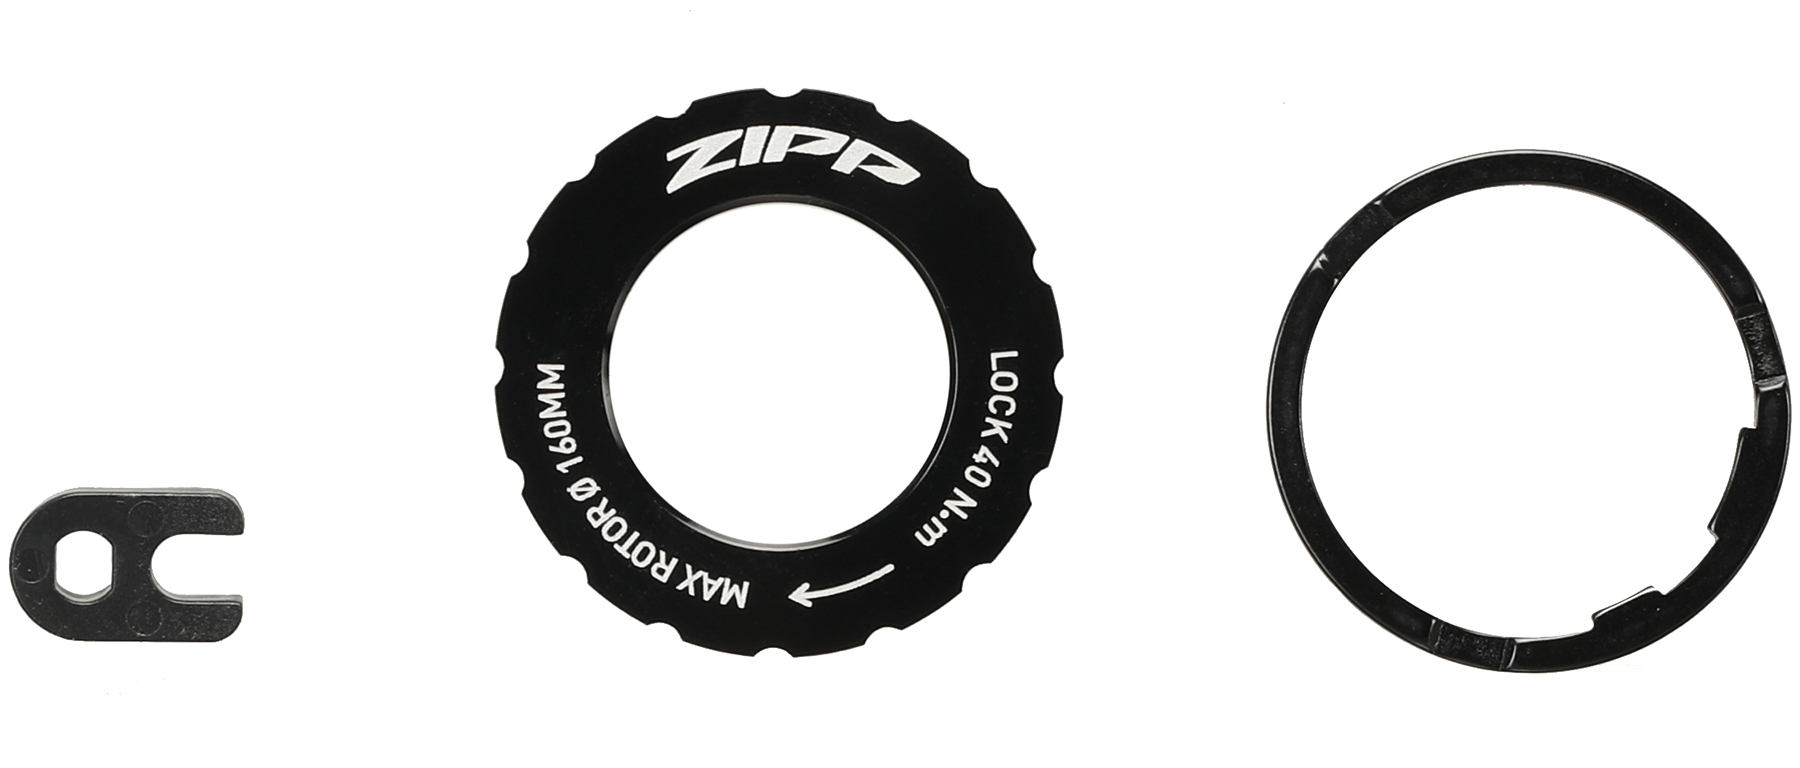 Zipp 404 Firecrest Tubeless Disc Wheel